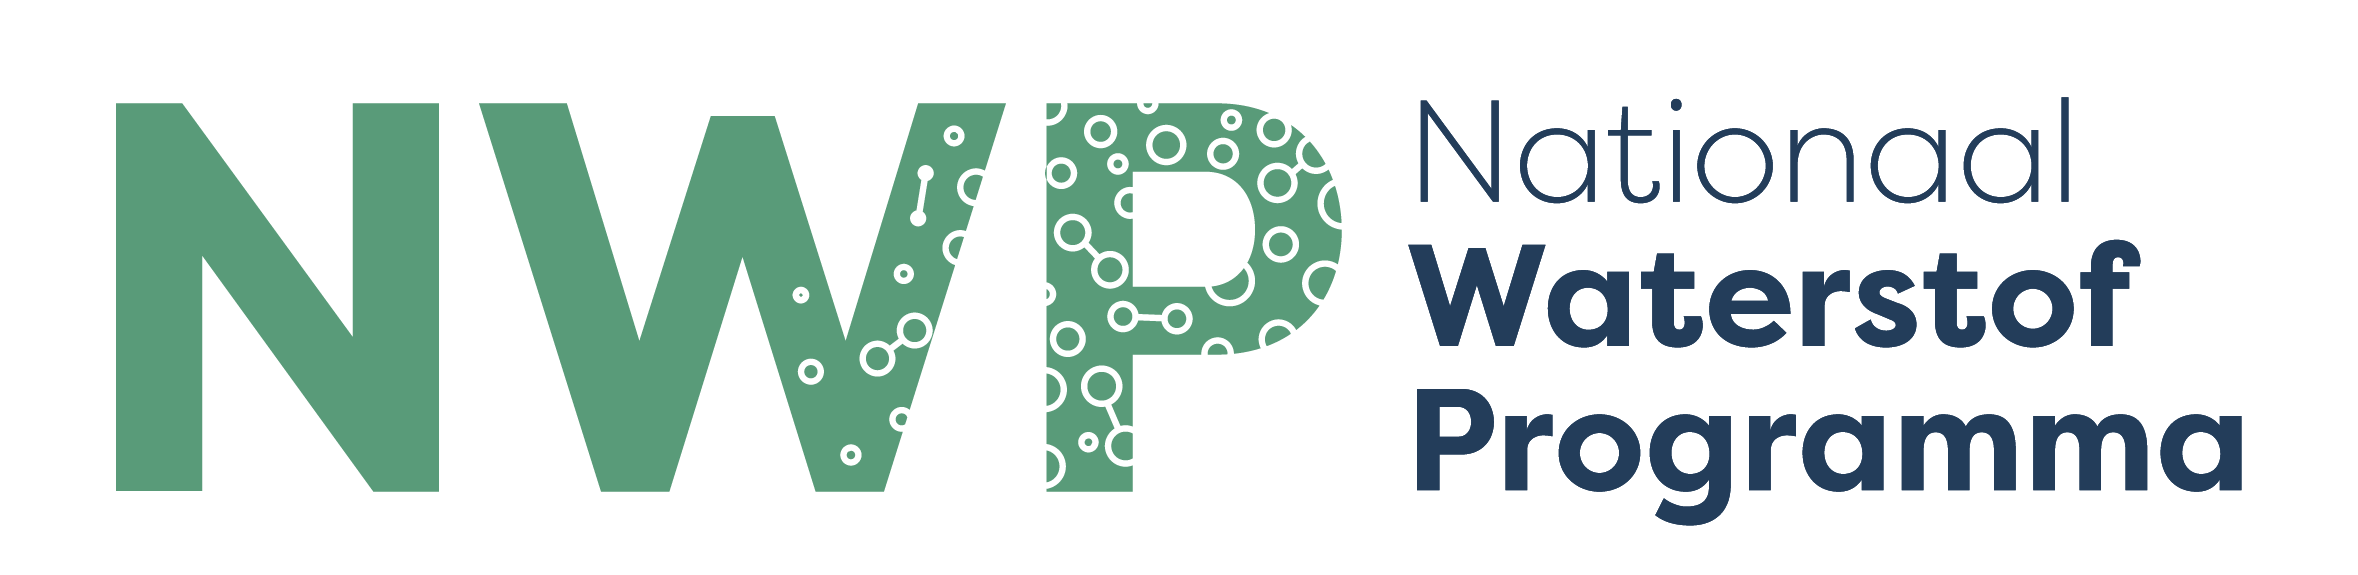 Nationaal Waterstof Programma logo